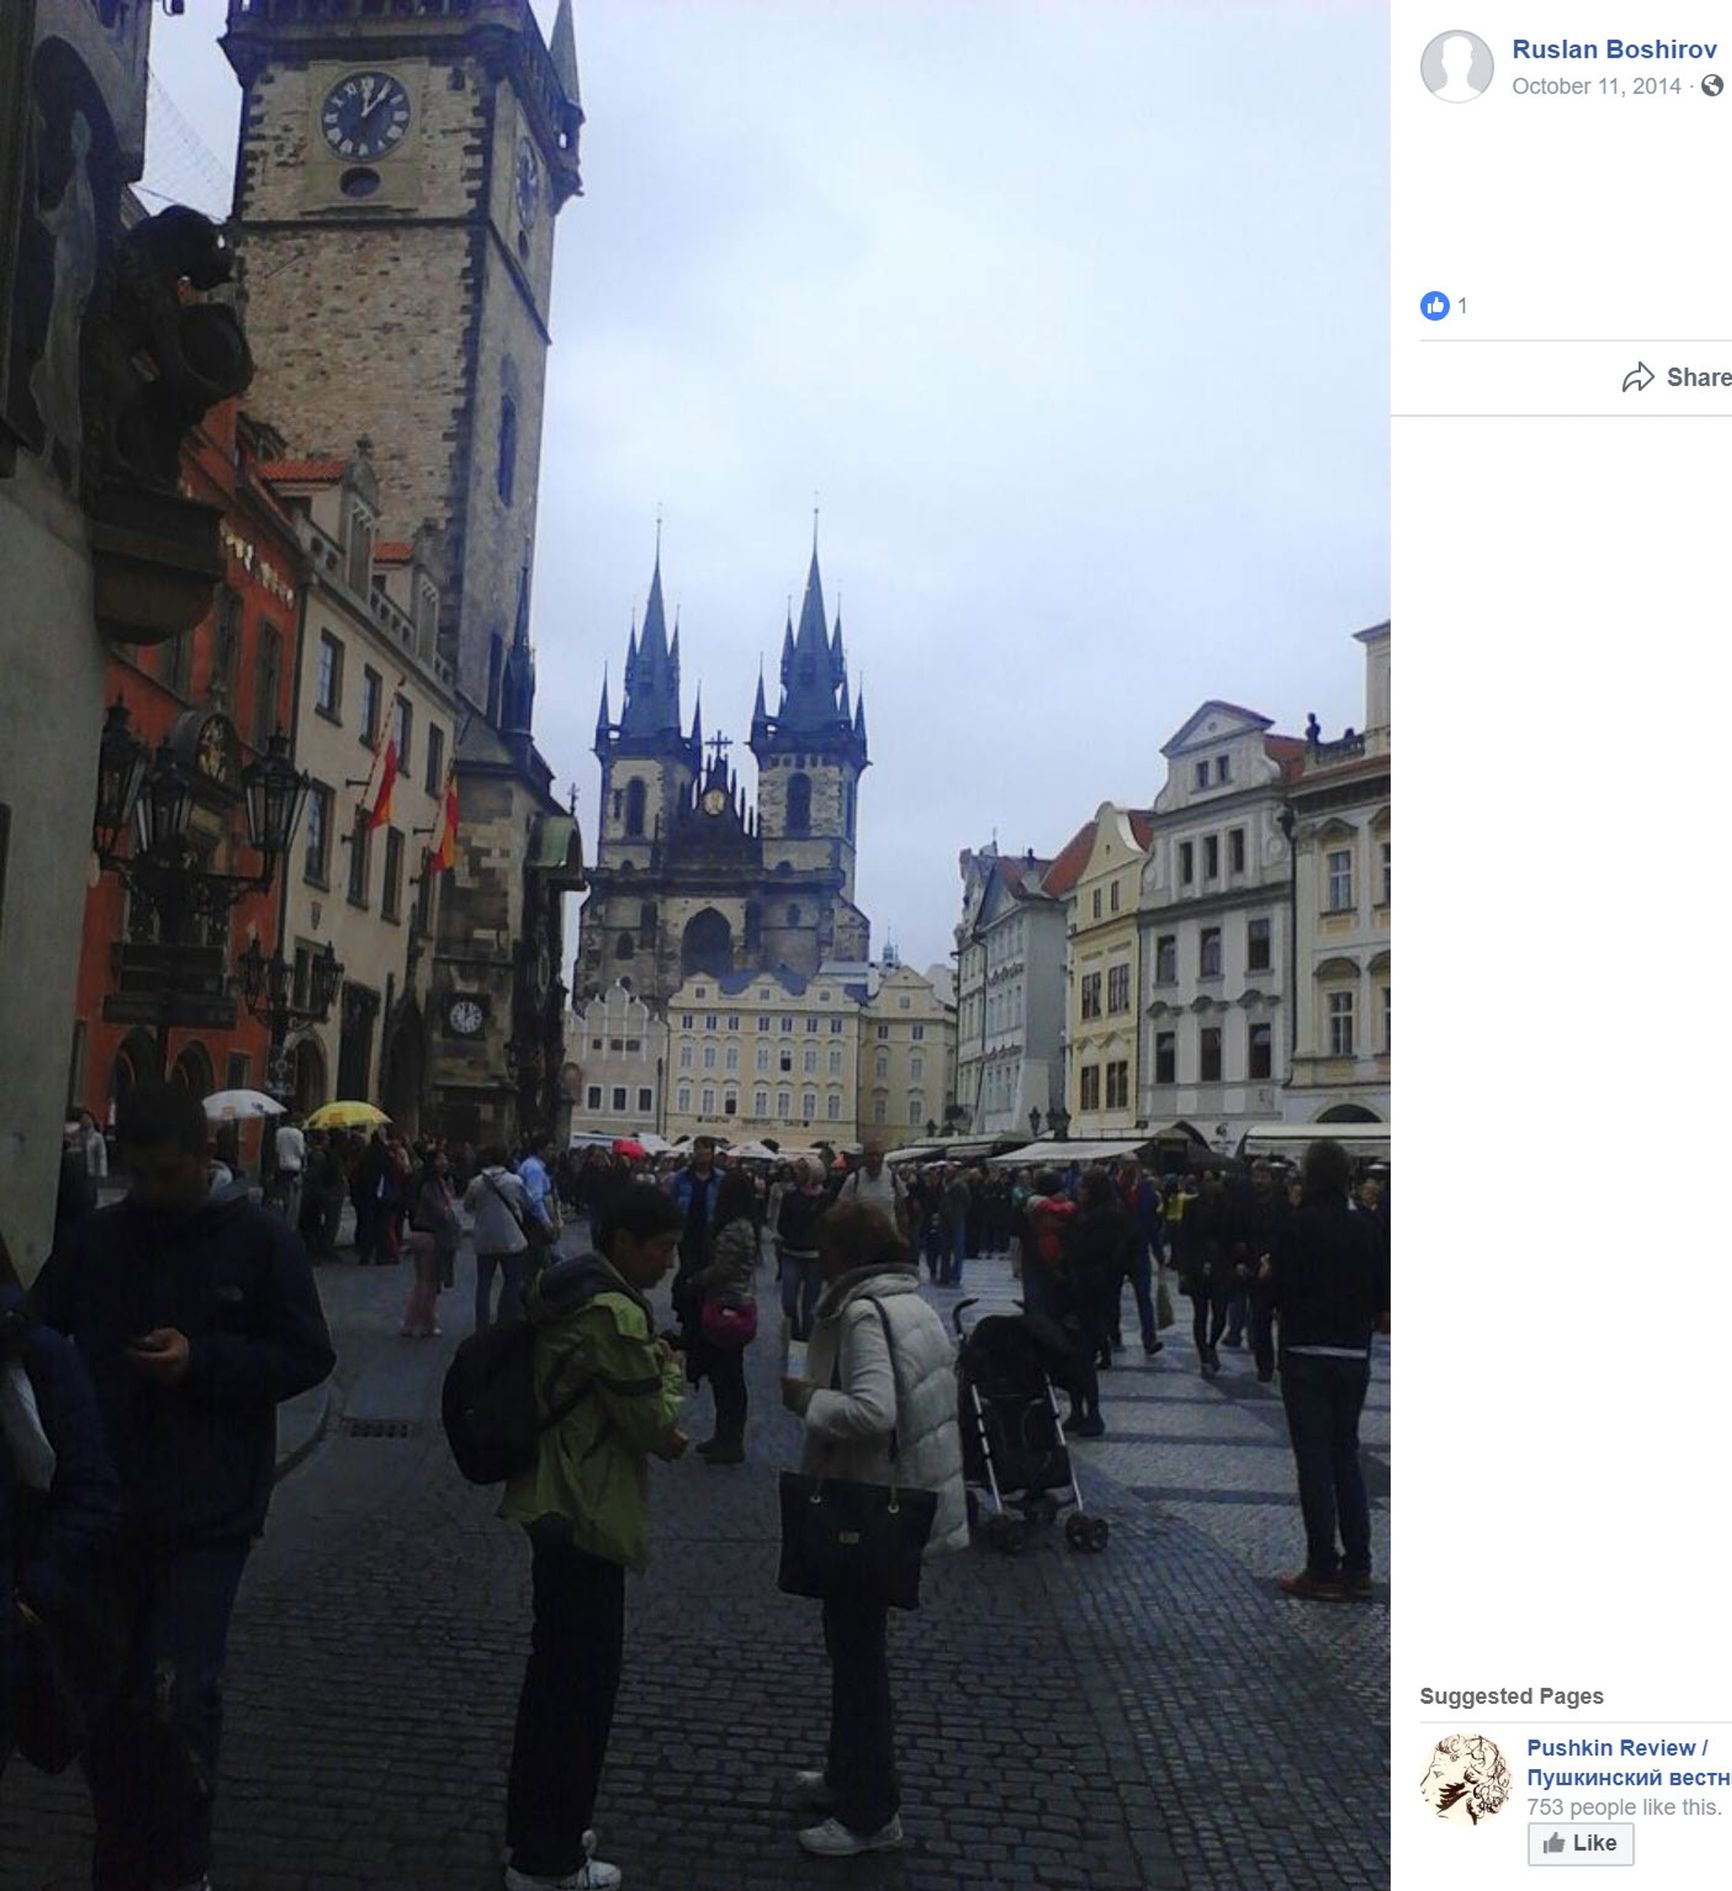 Chepiga’s photo of Prague’s tourist attractions